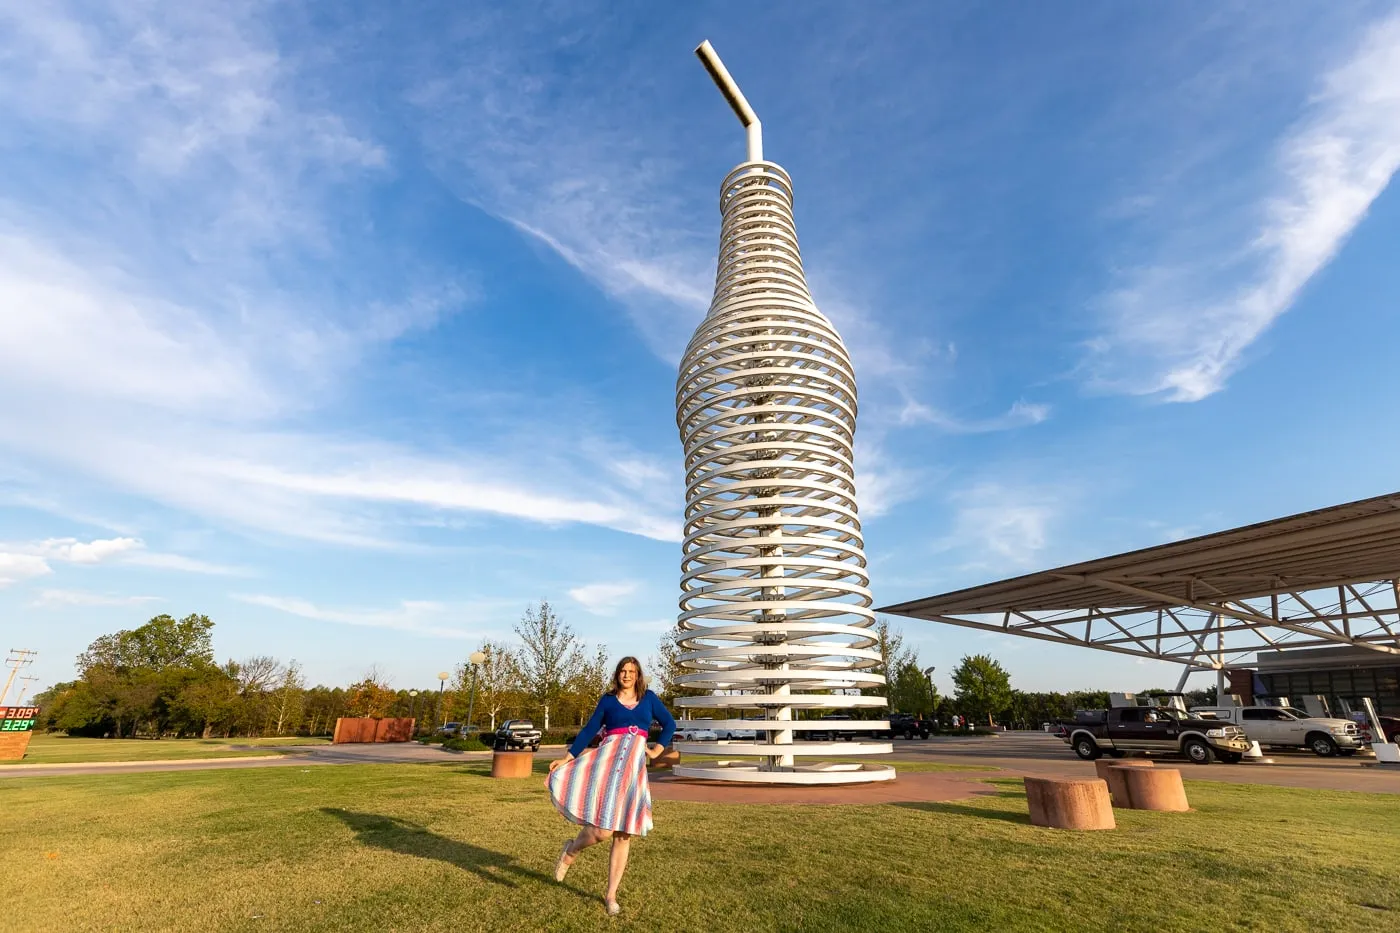 Pops 66 Soda Ranch & World's Largest Soda Bottle in Arcadia, Oklahoma Route 66 Roadside Attraction